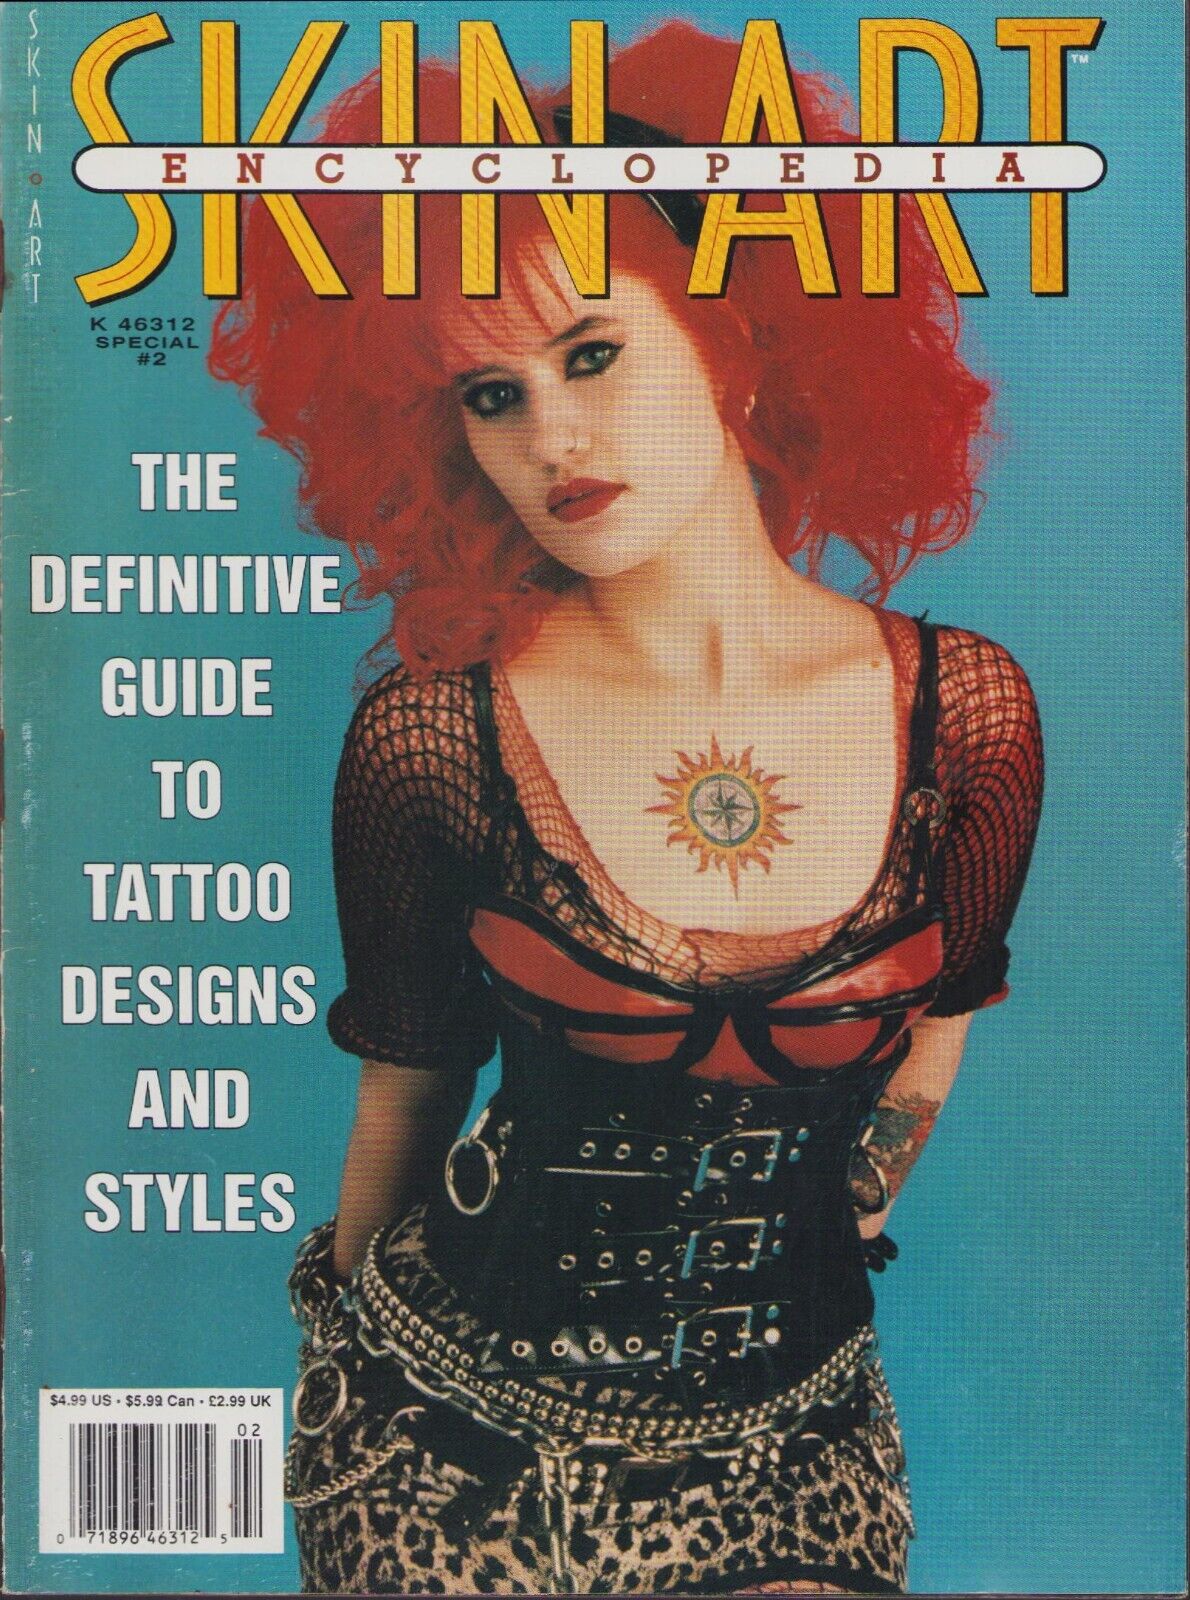 Skin Art # 2 magazine back issue Skin Art magizine back copy 